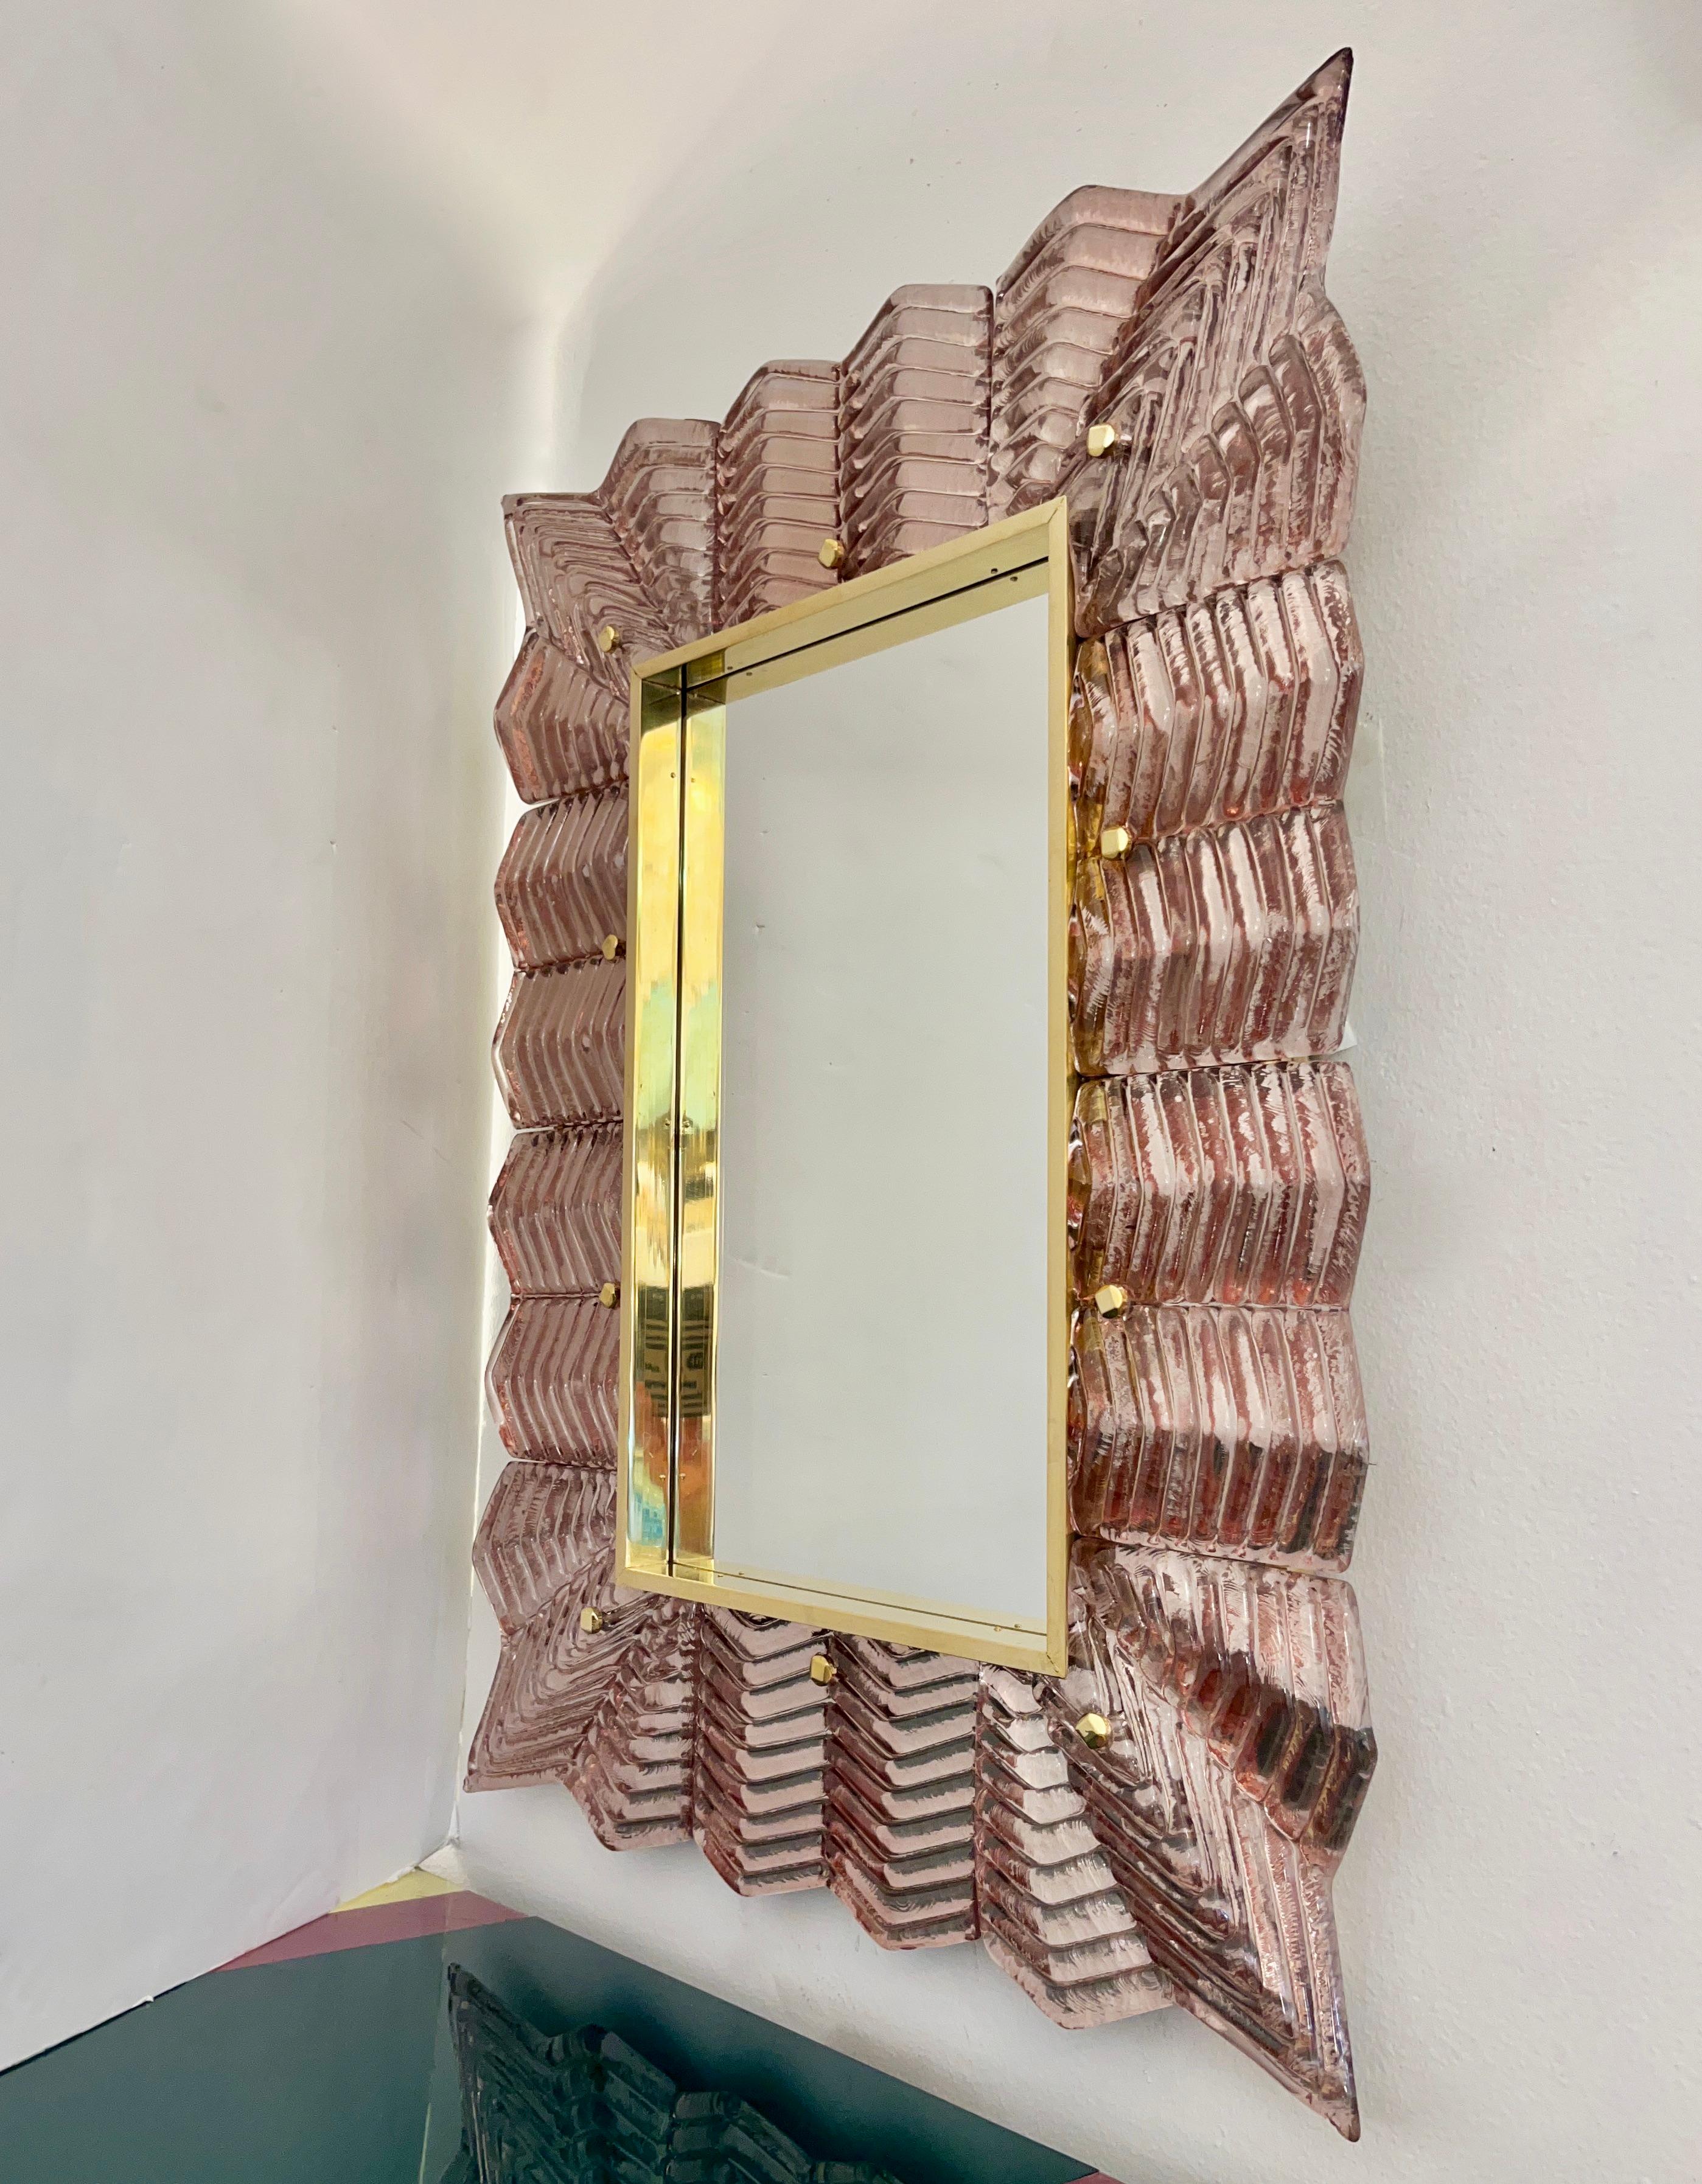 Bespoke Italian Art Deco Design Small Ruffled Pink Murano Glass Brass Mirror For Sale 5